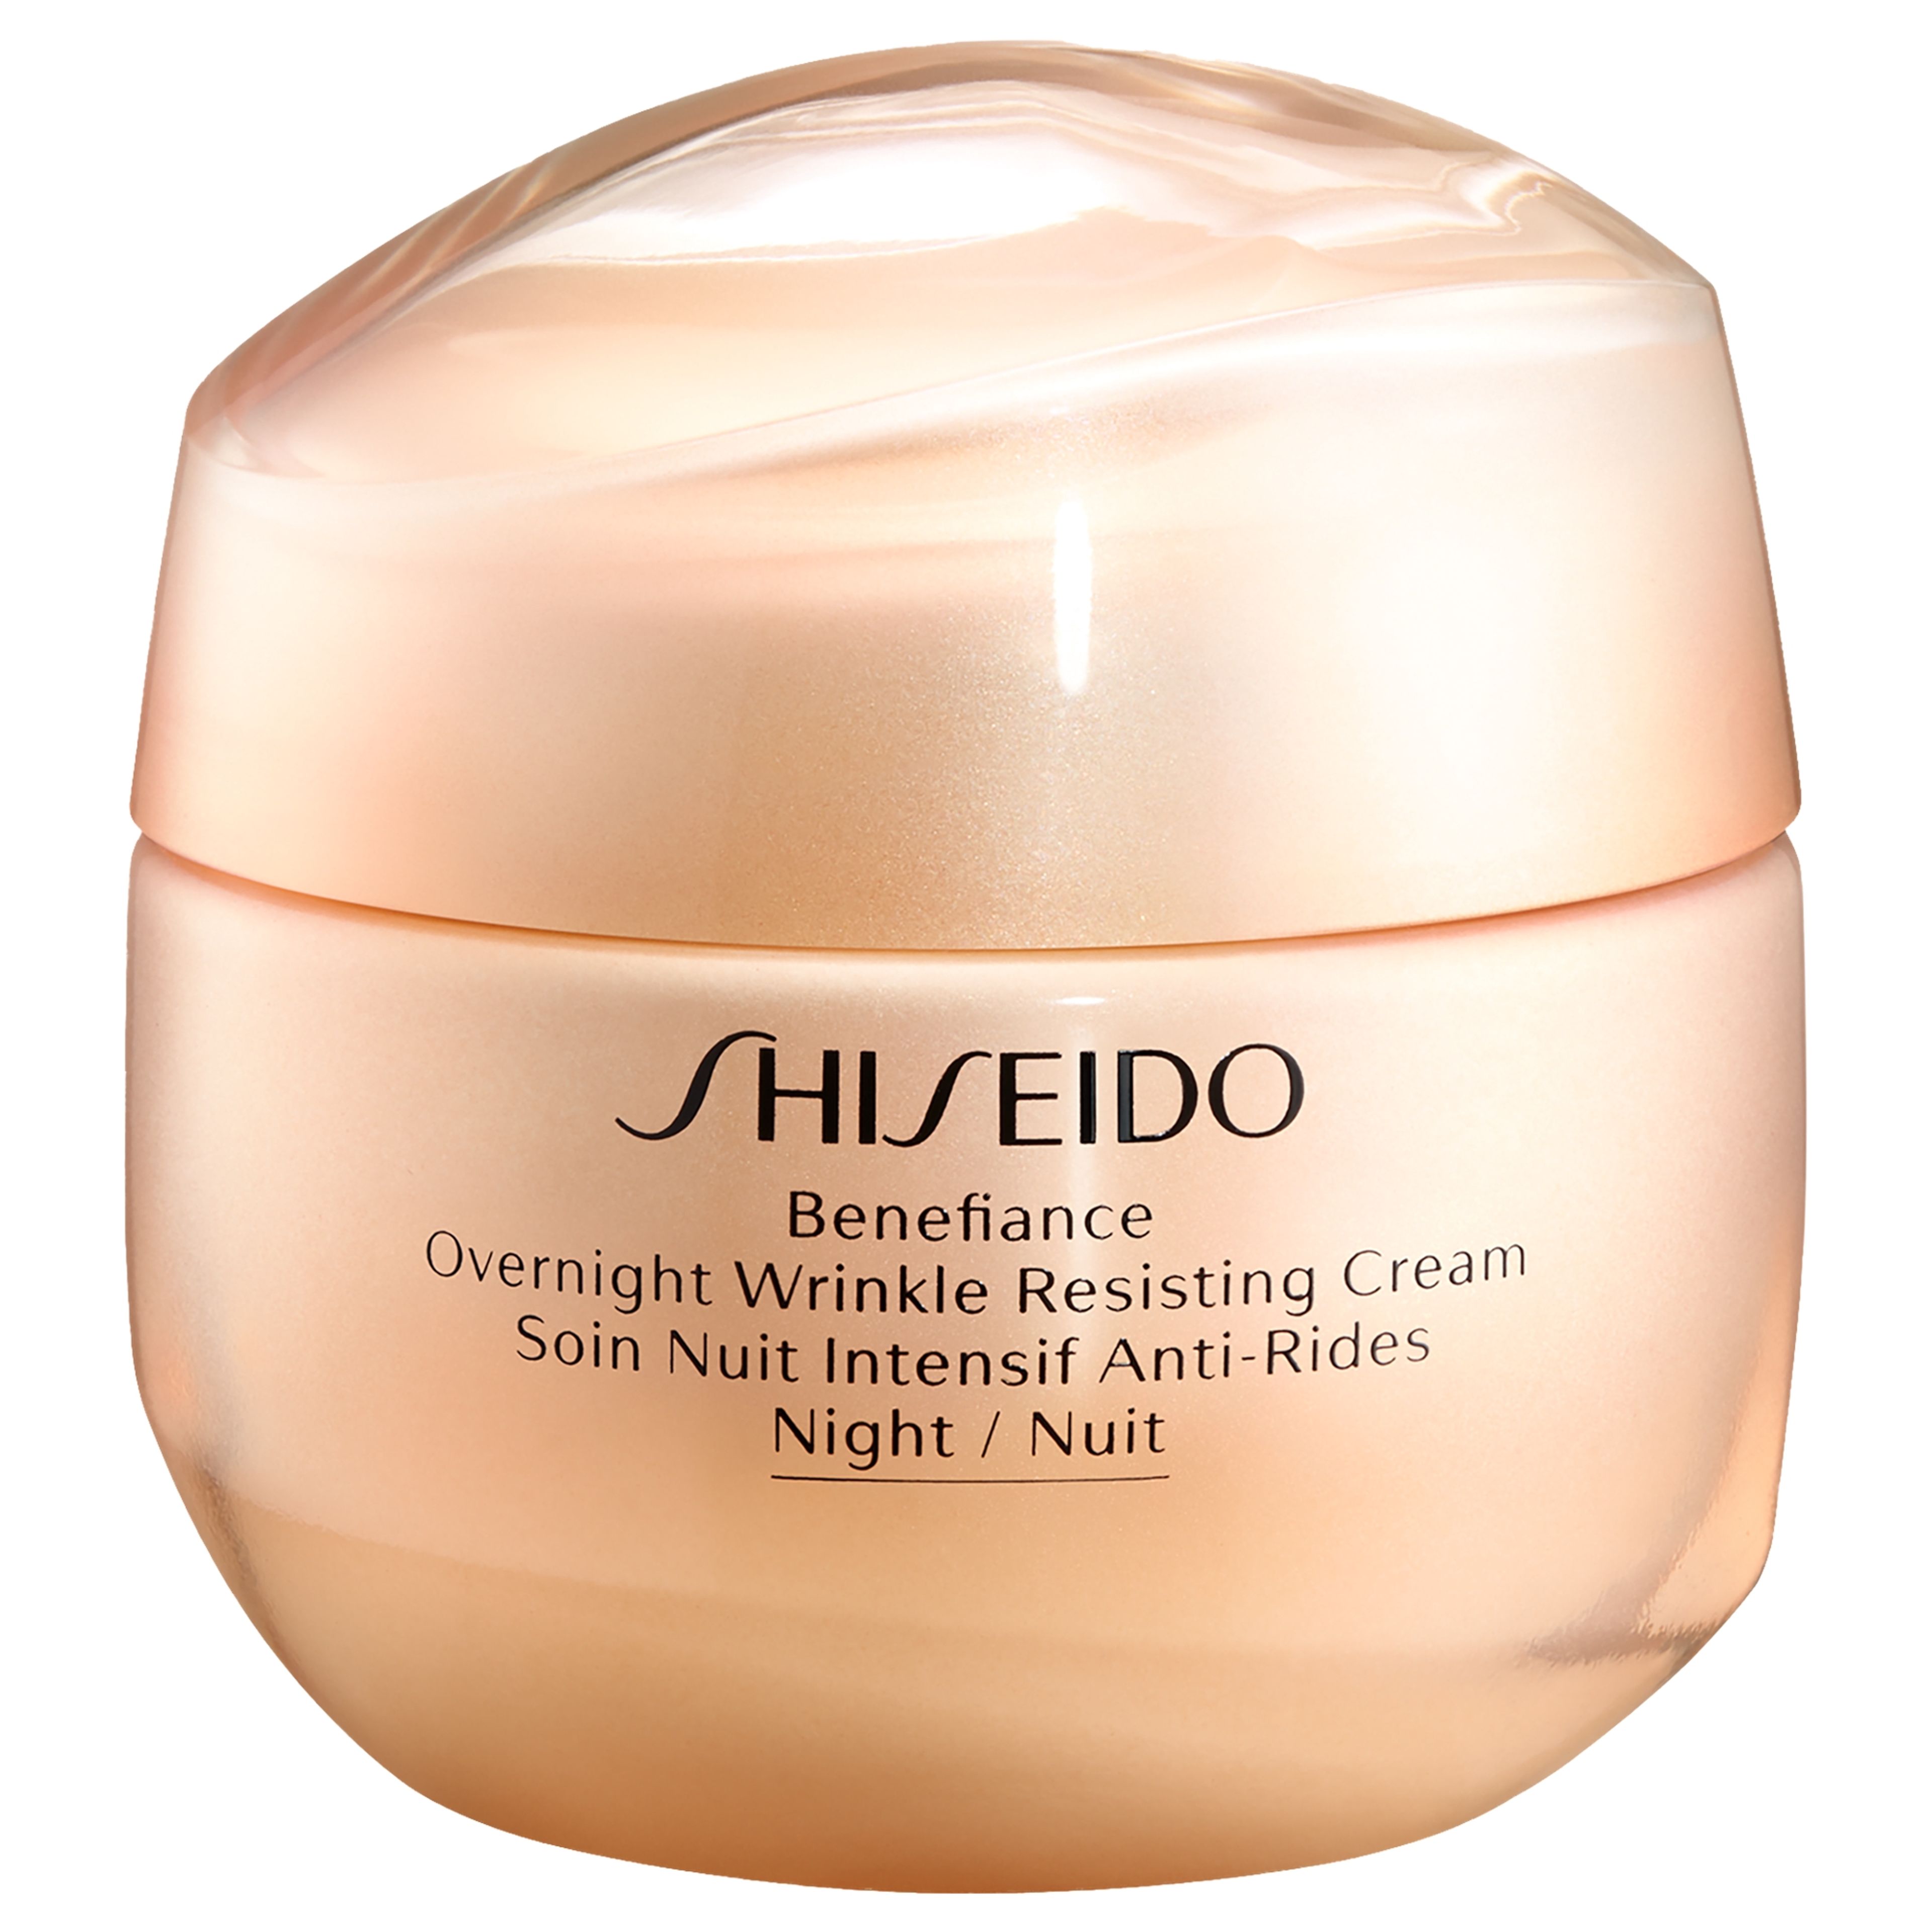 Shiseido Overnight Wrinkle Resisting Cream 1